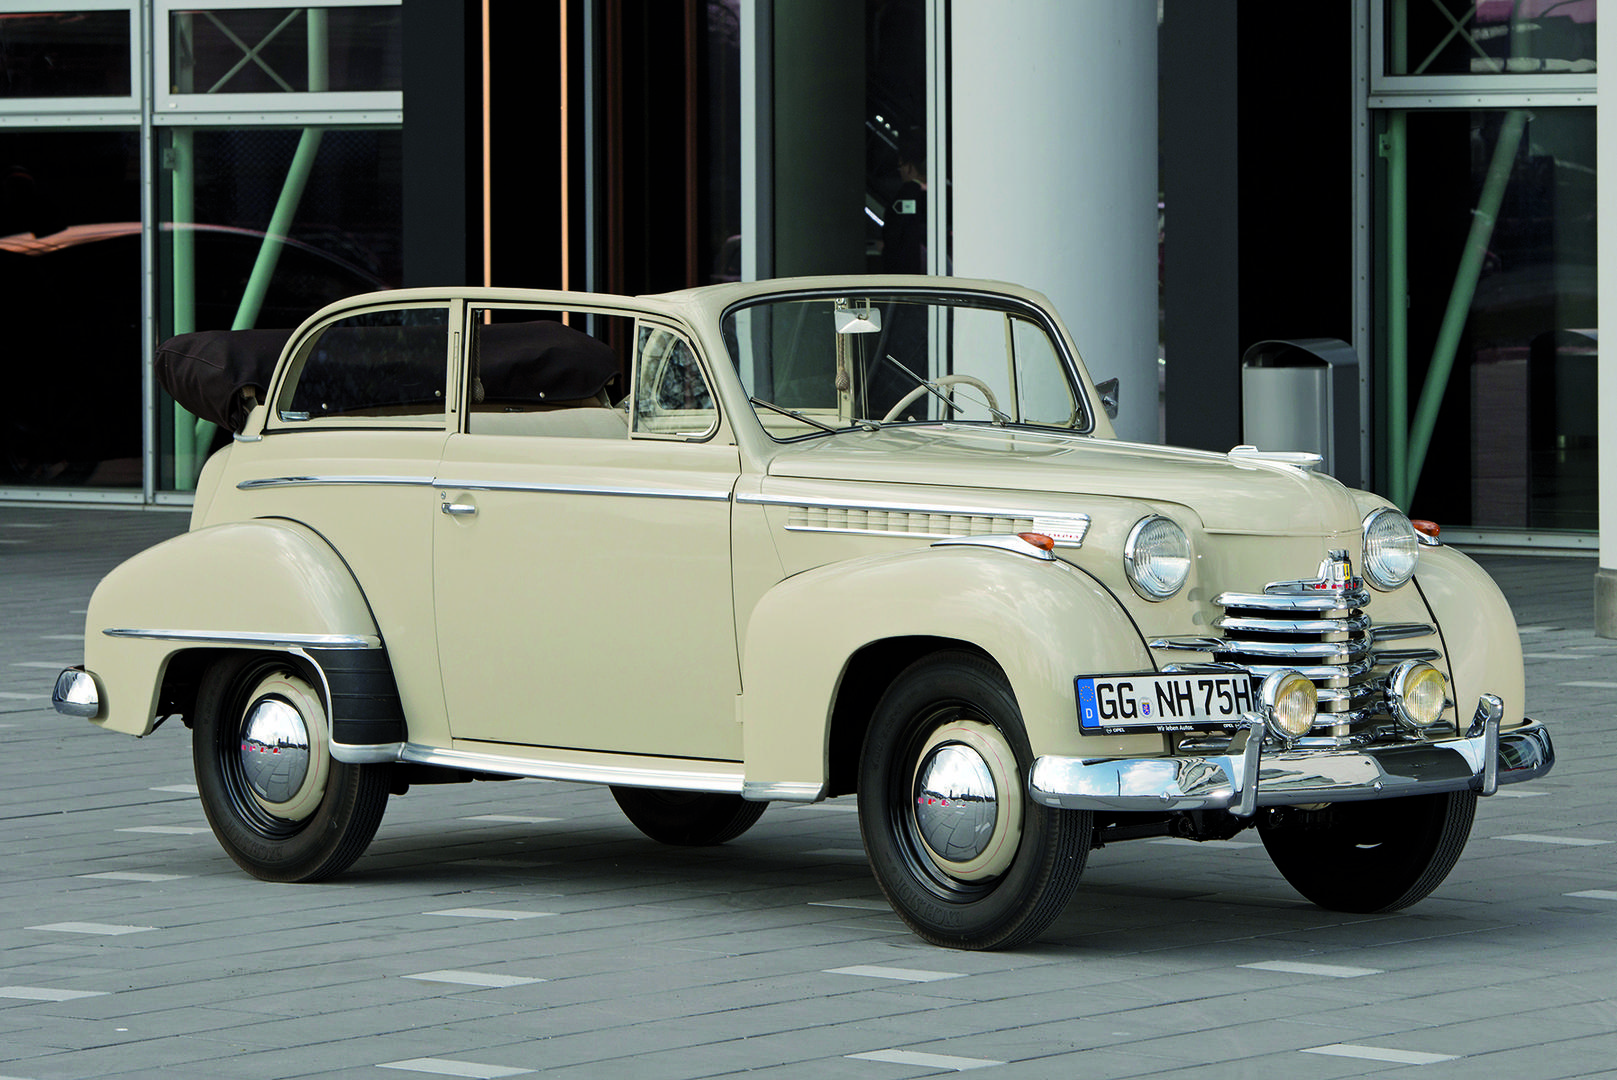 OPEL OLYMPIA 1950. Prvi Opelov poslijeratni model temeljio se na prijeratnoj Olympiji, ali je, dakako, moderniziran